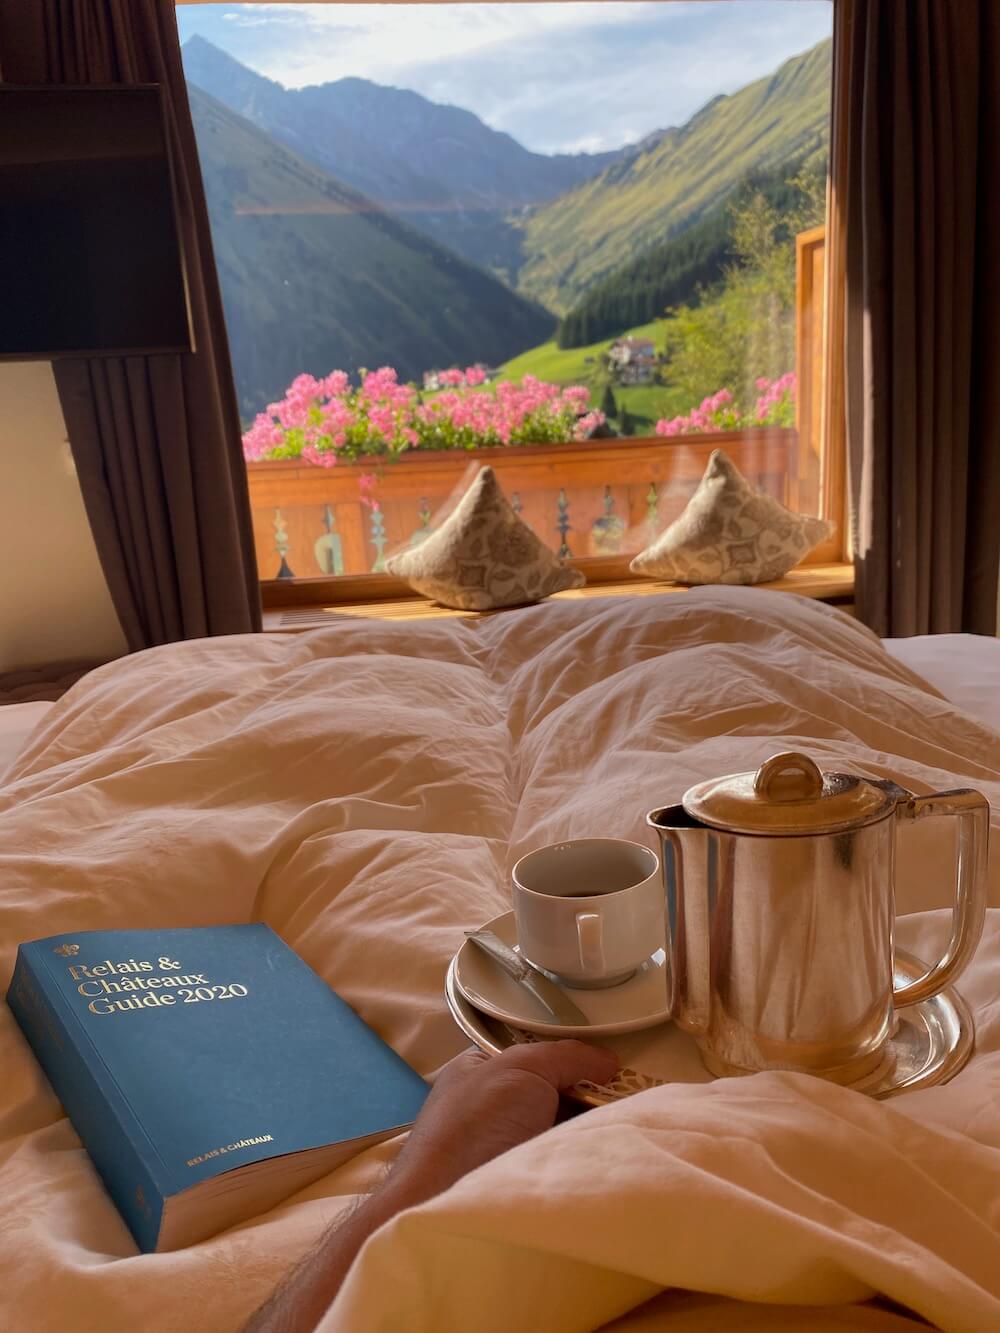 Hotel Singer, Berwang - Kaffee im Bett